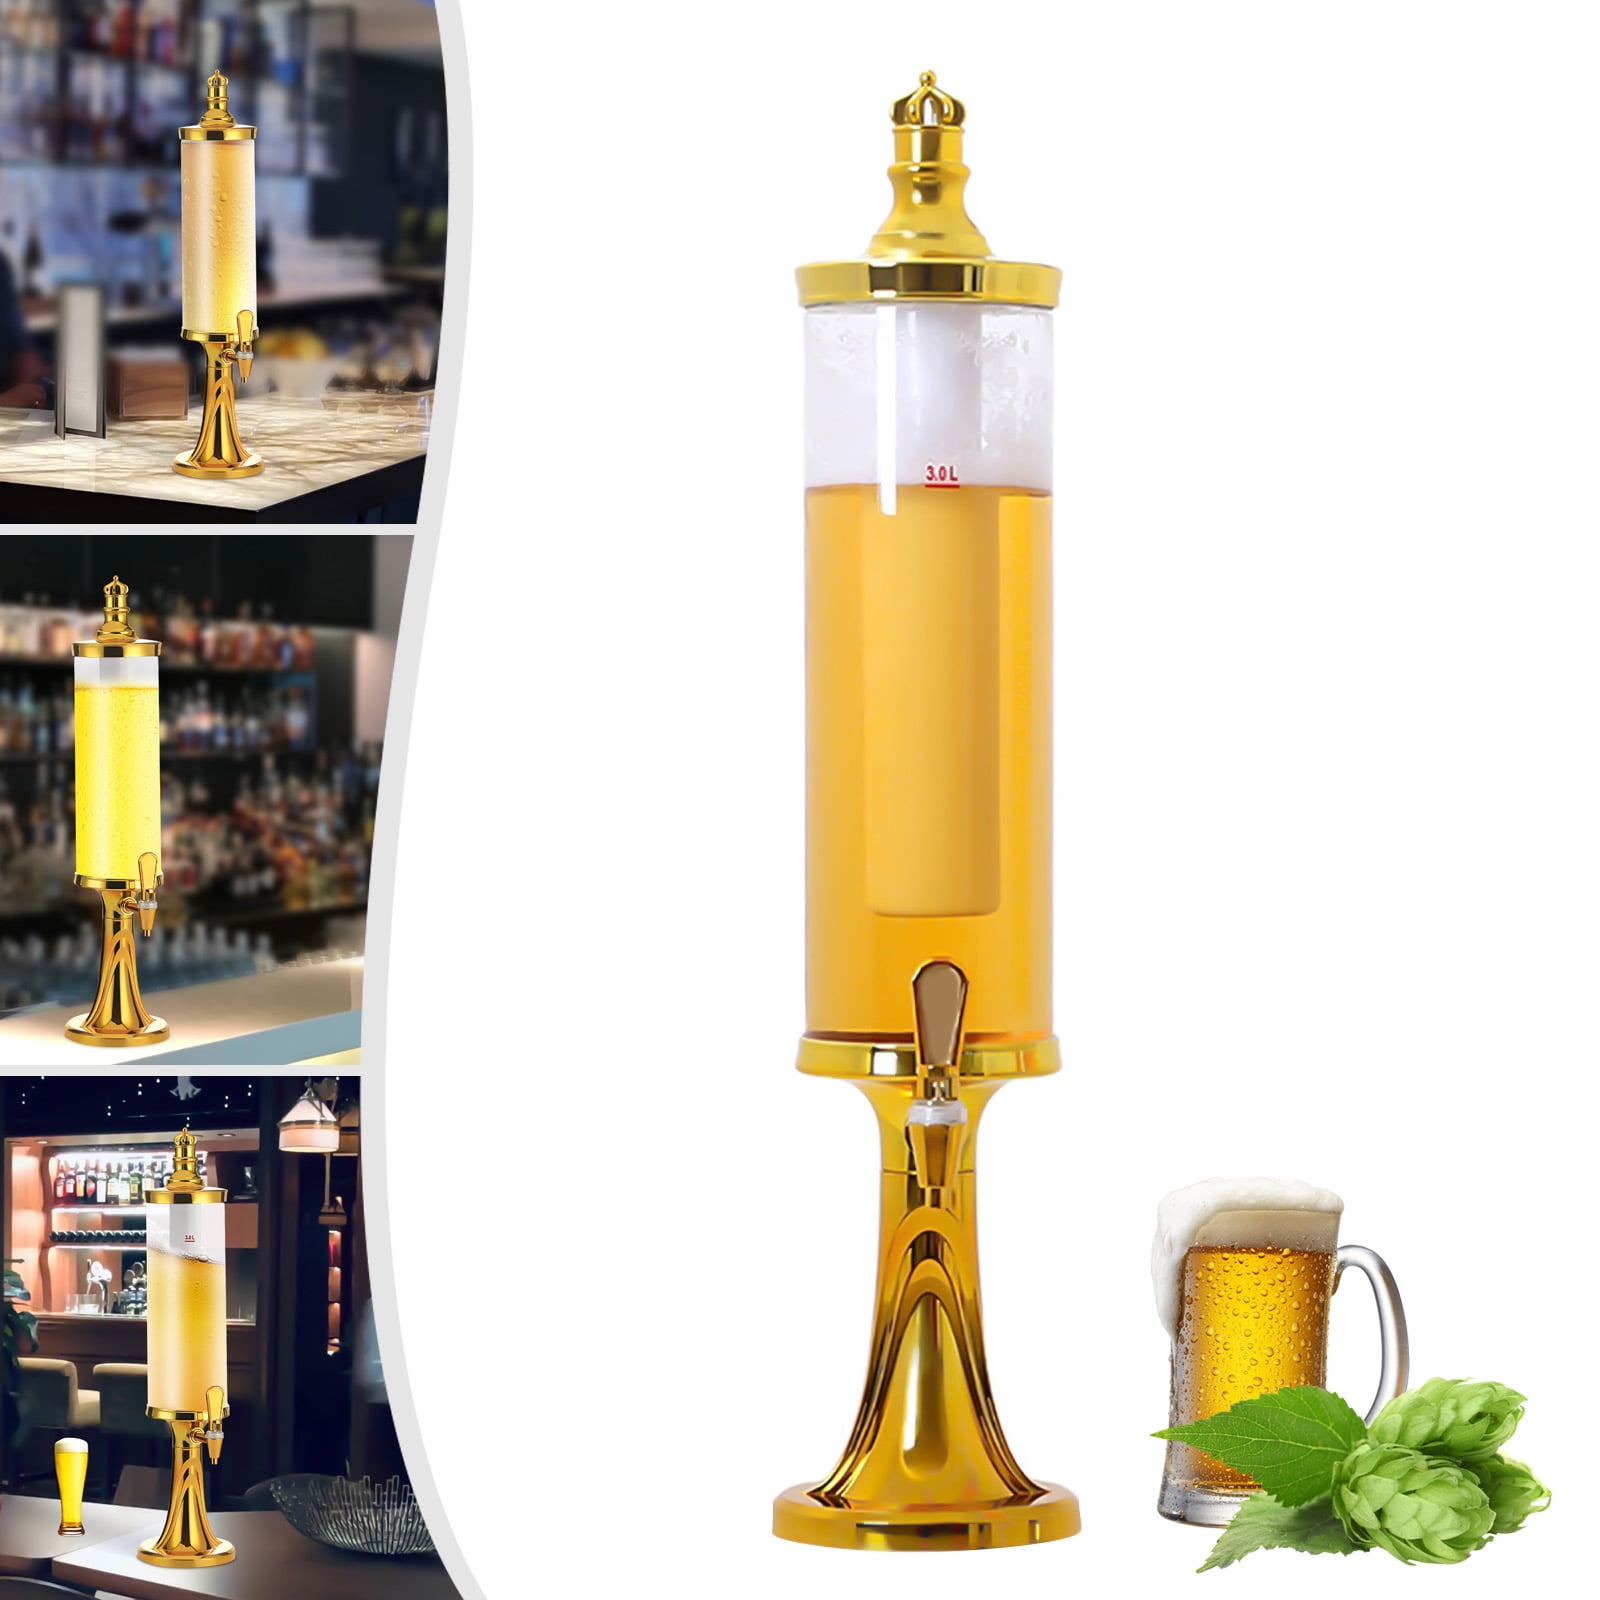 Cosmetal Drink Tower - Sparkling water dispenser